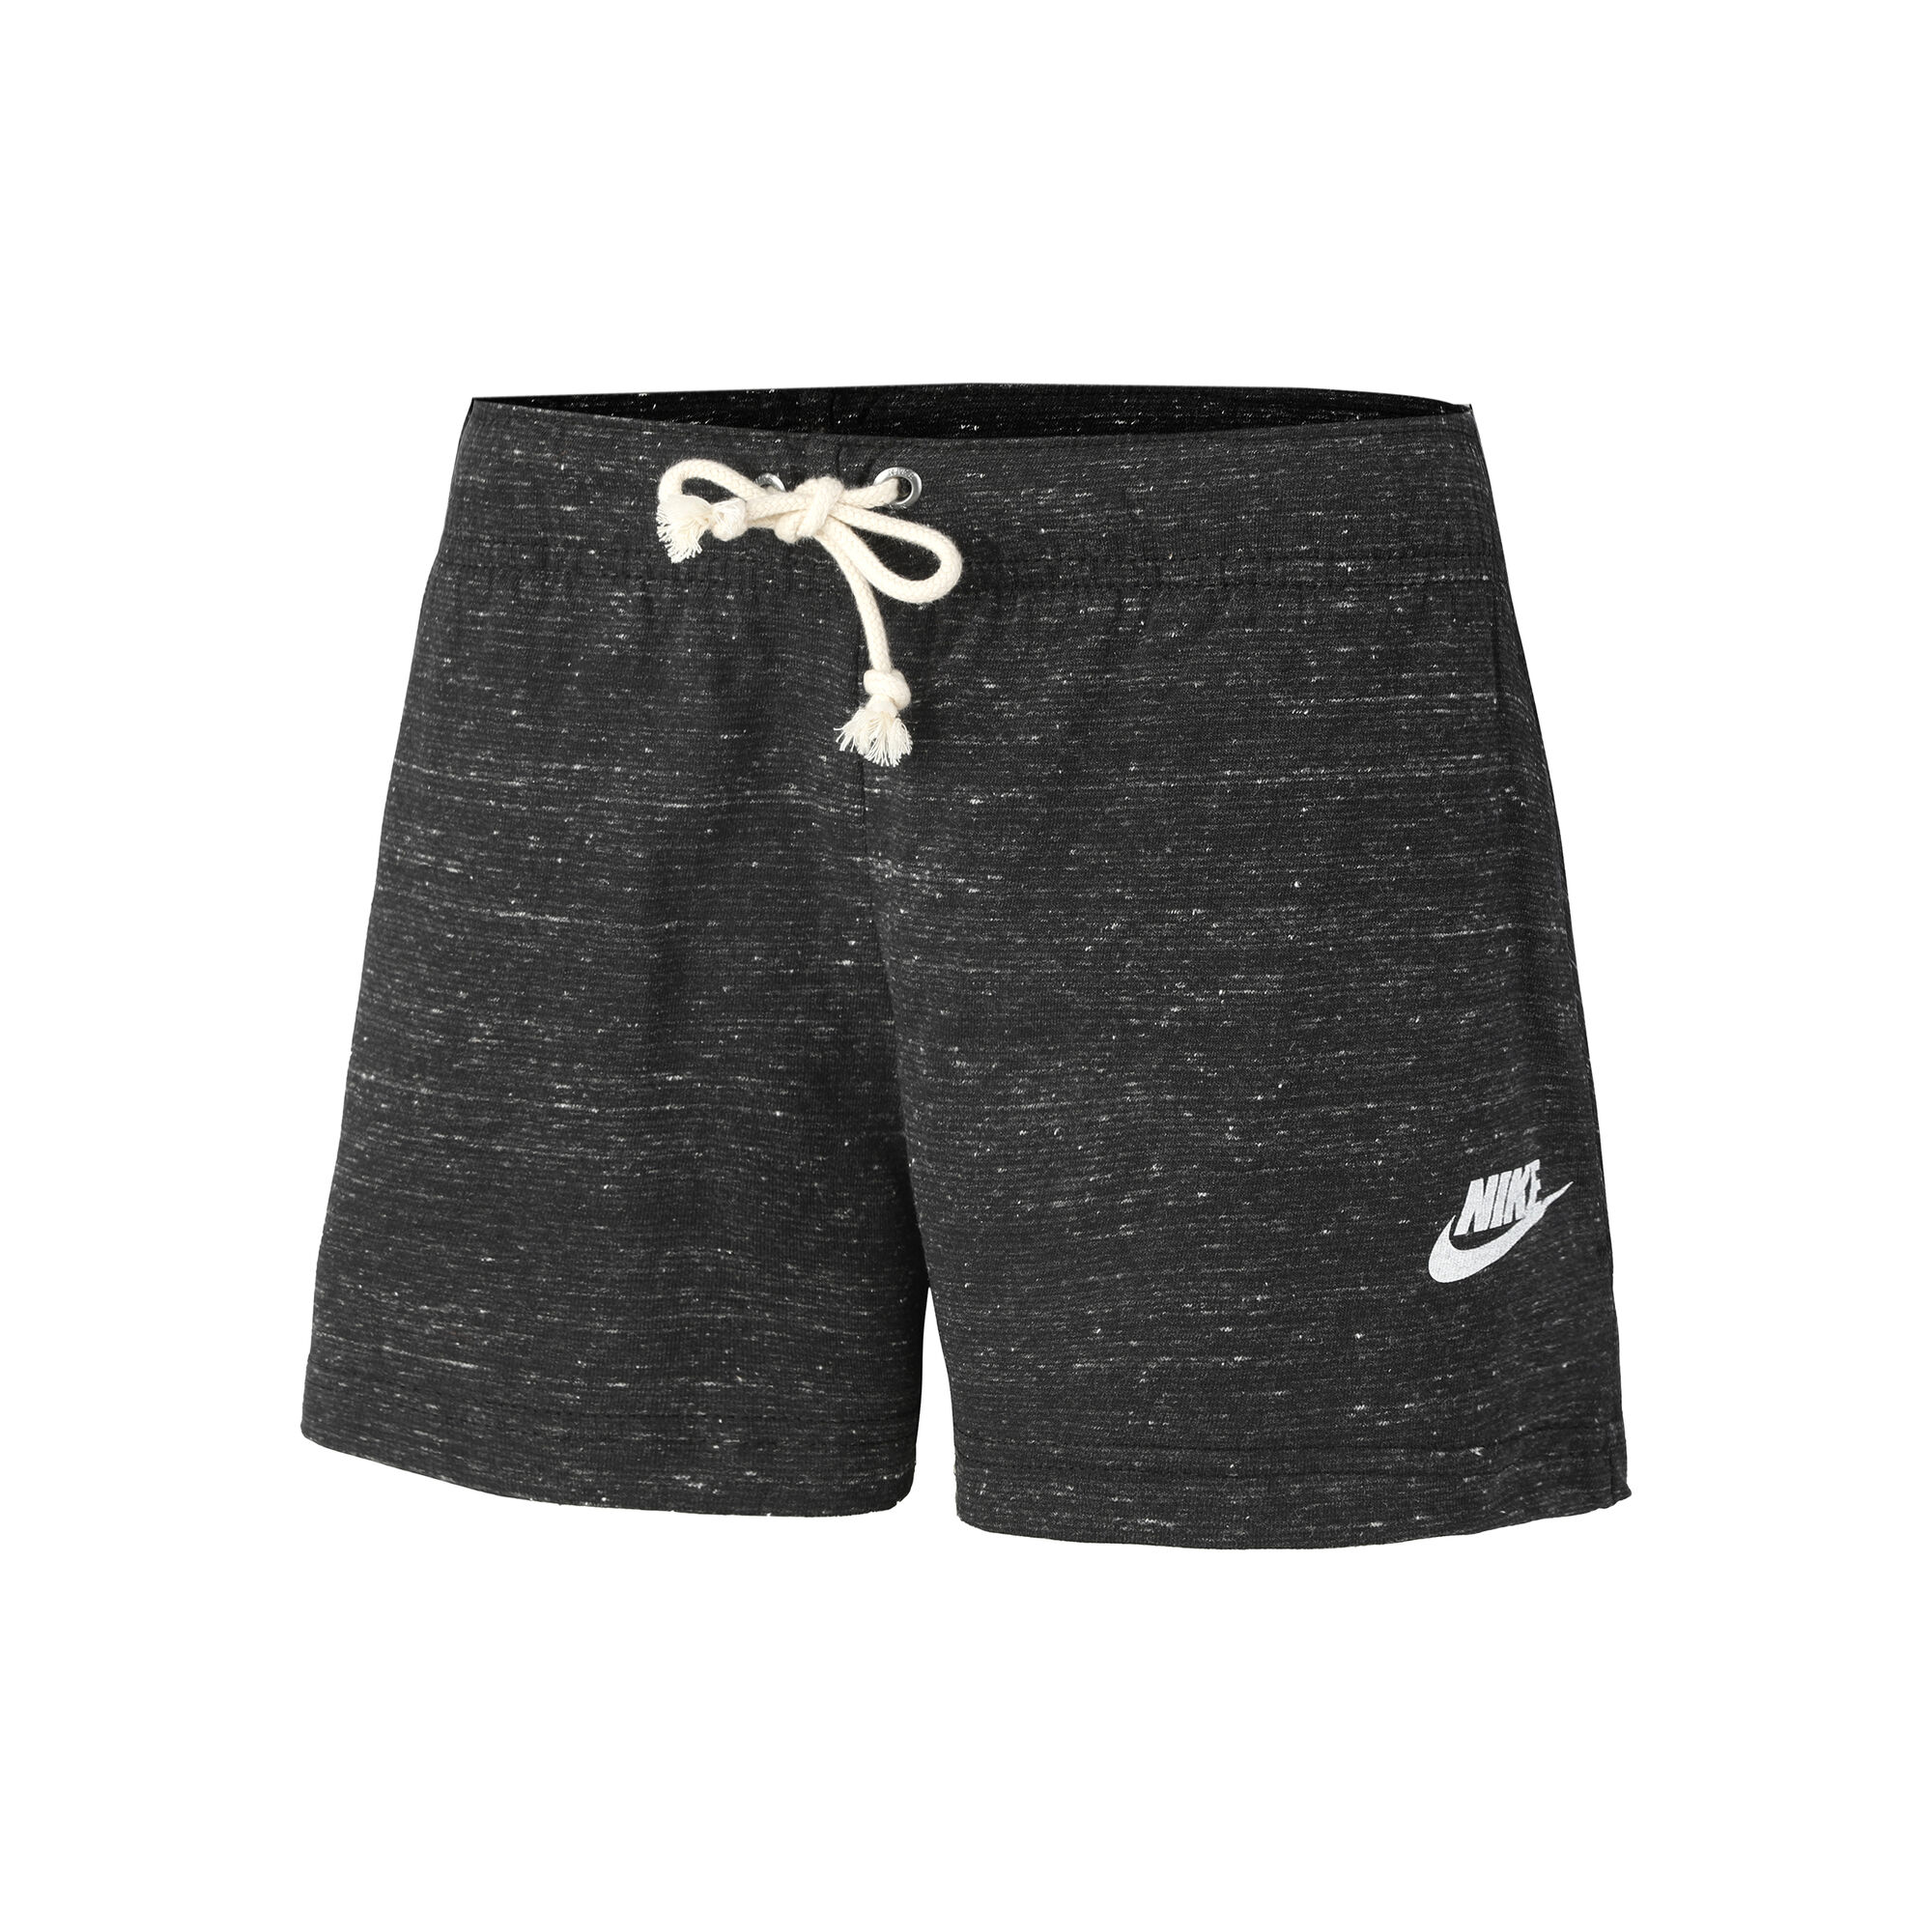 Buy Nike Sportswear Gym Vintage Shorts Women Black online